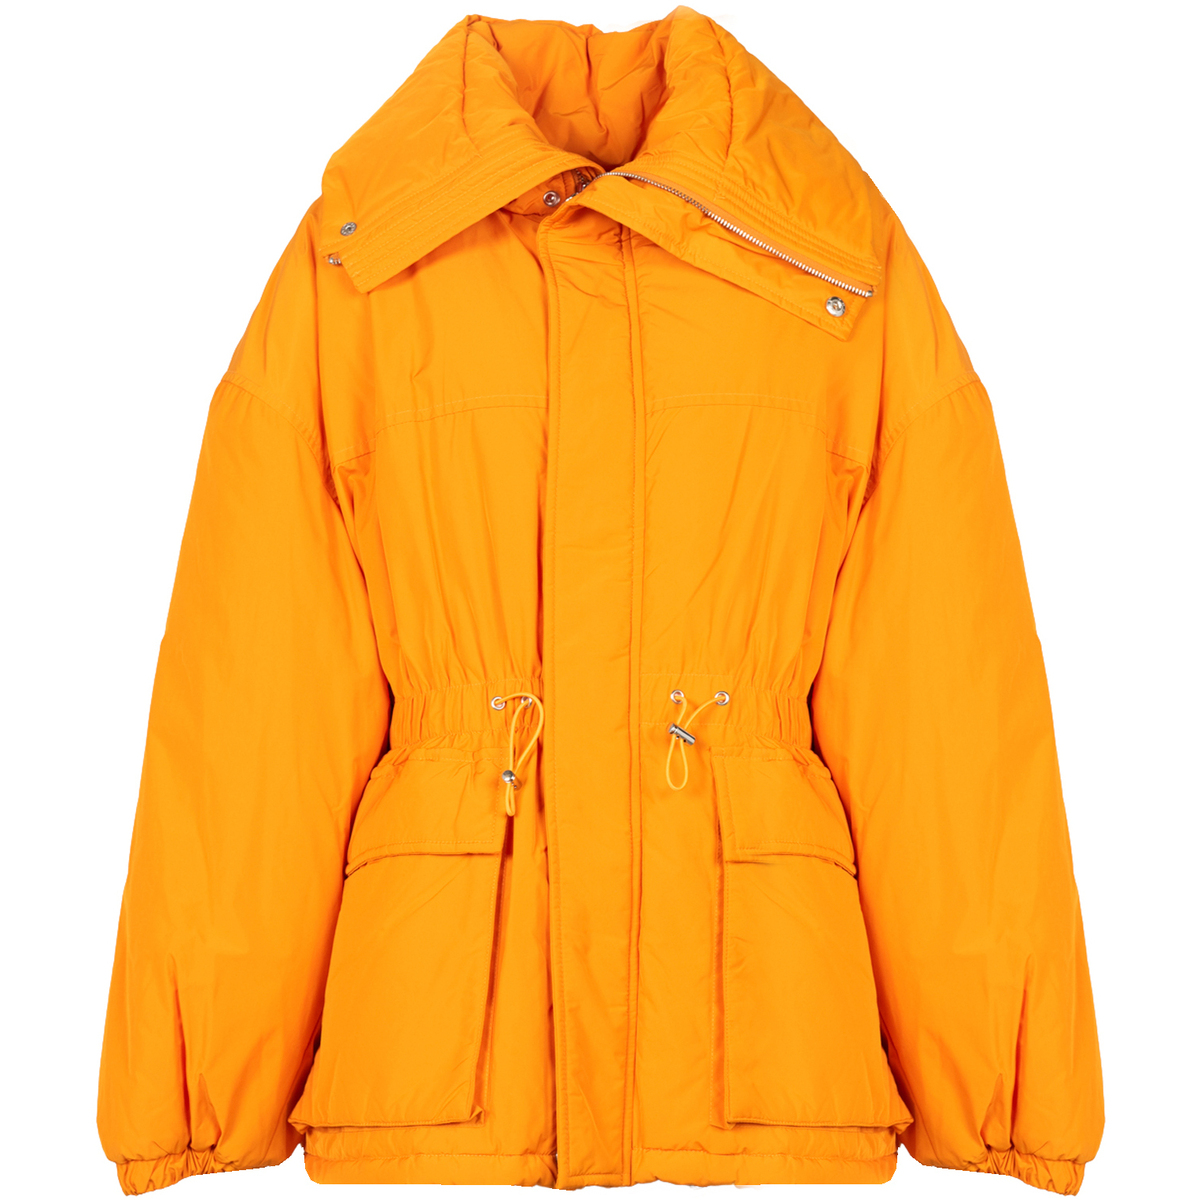 Textiel Dames Wind jackets Silvian Heach CVA22084PI | Leproc Orange